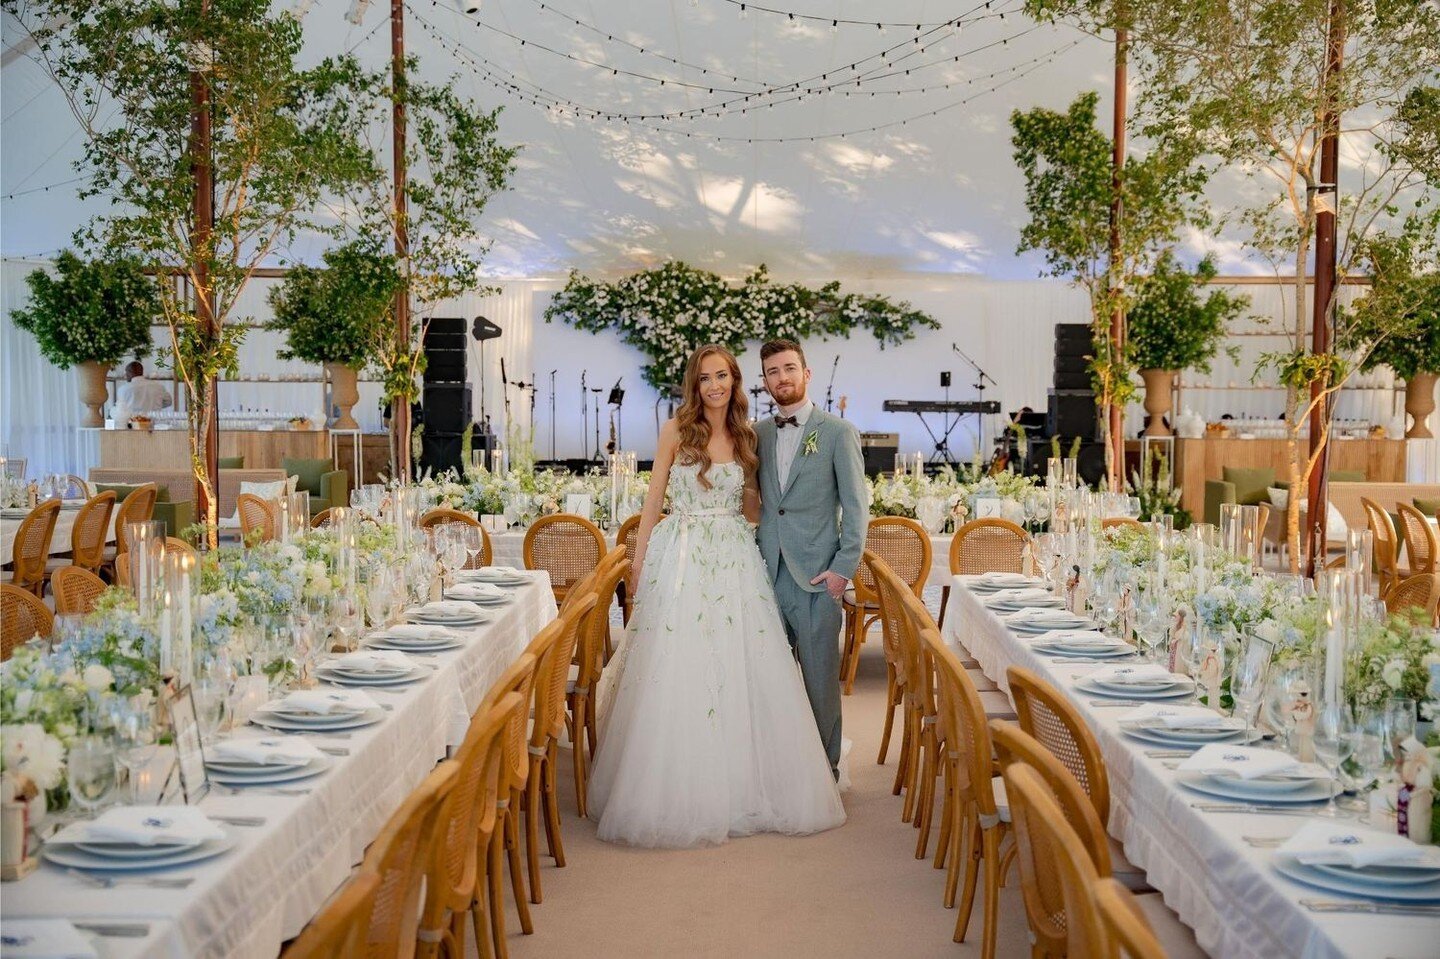 We are so looking forward to all of our Amazing Hampton Weddings.
Contact us to discus your special day: Bio in Link

@jeanpierrcreates
@ashgrovefarm
@hearstpublication
@highstylebridalmakeup
#Hamptons#LongIslandHamptons#SouthHampton
#celebrityArtist